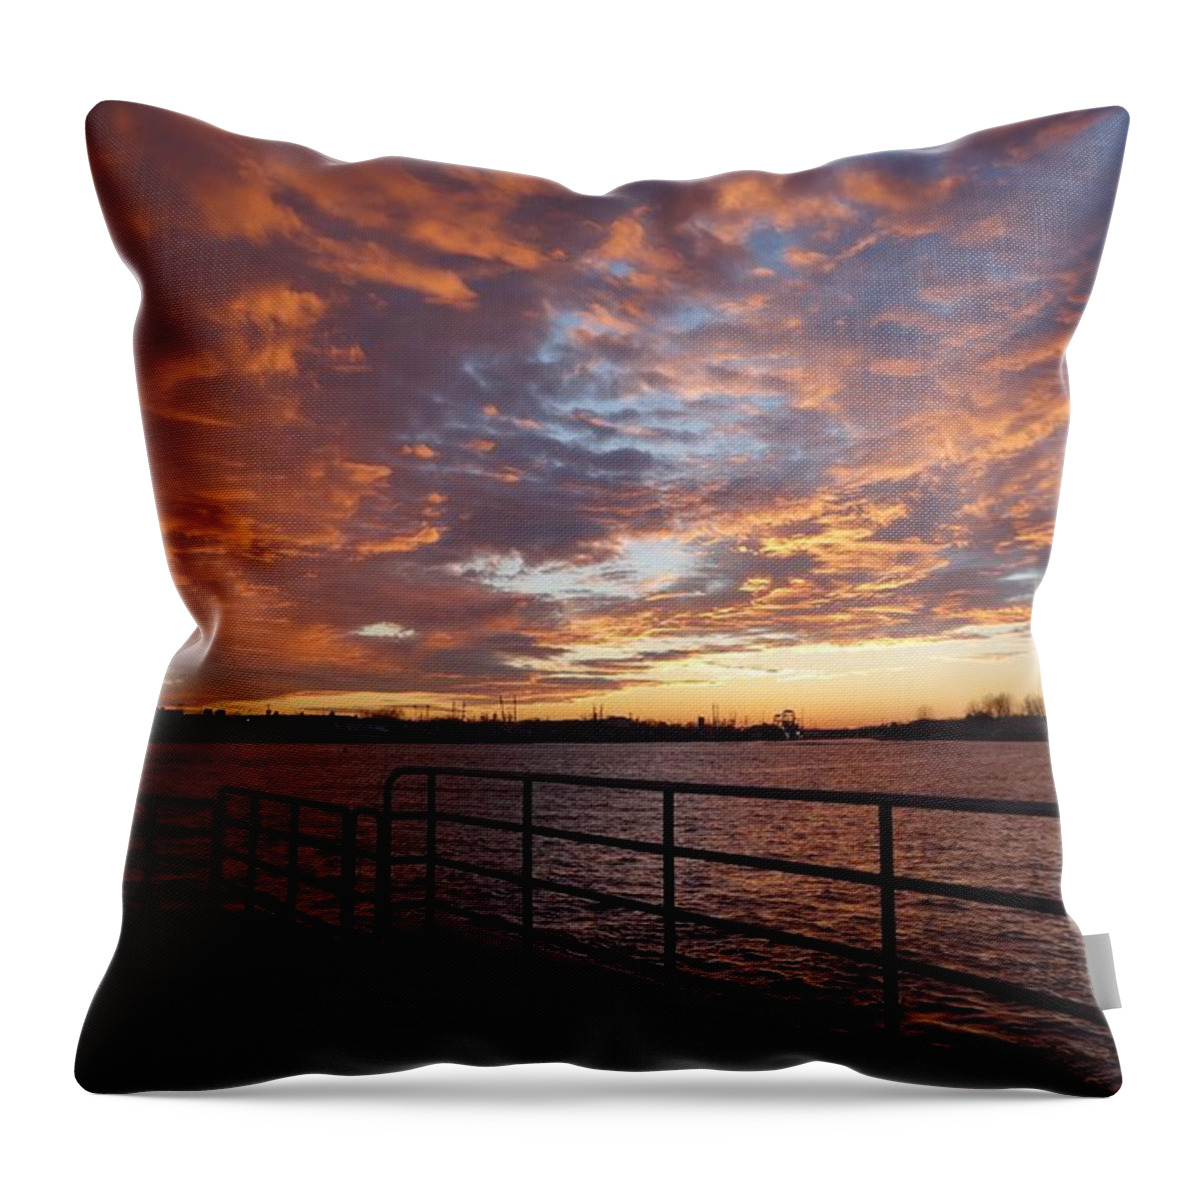 Sunset Throw Pillow featuring the photograph Sunset Over The Manasquan Inlet 2 by Melinda Saminski